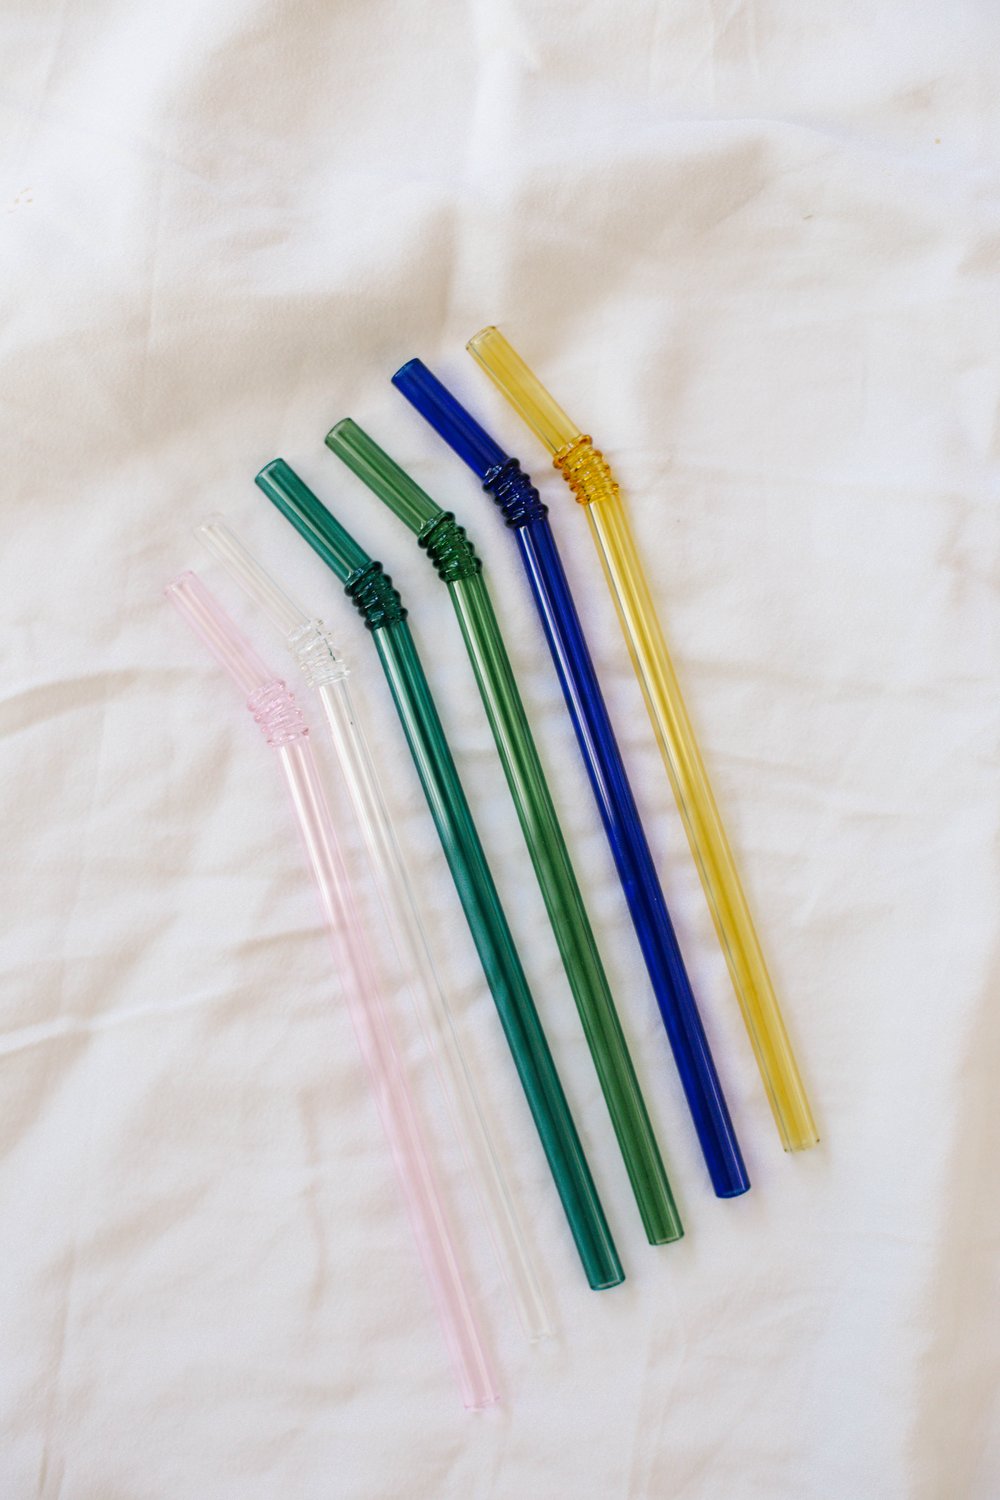 Colored Bent Glass Straws - Single Straw